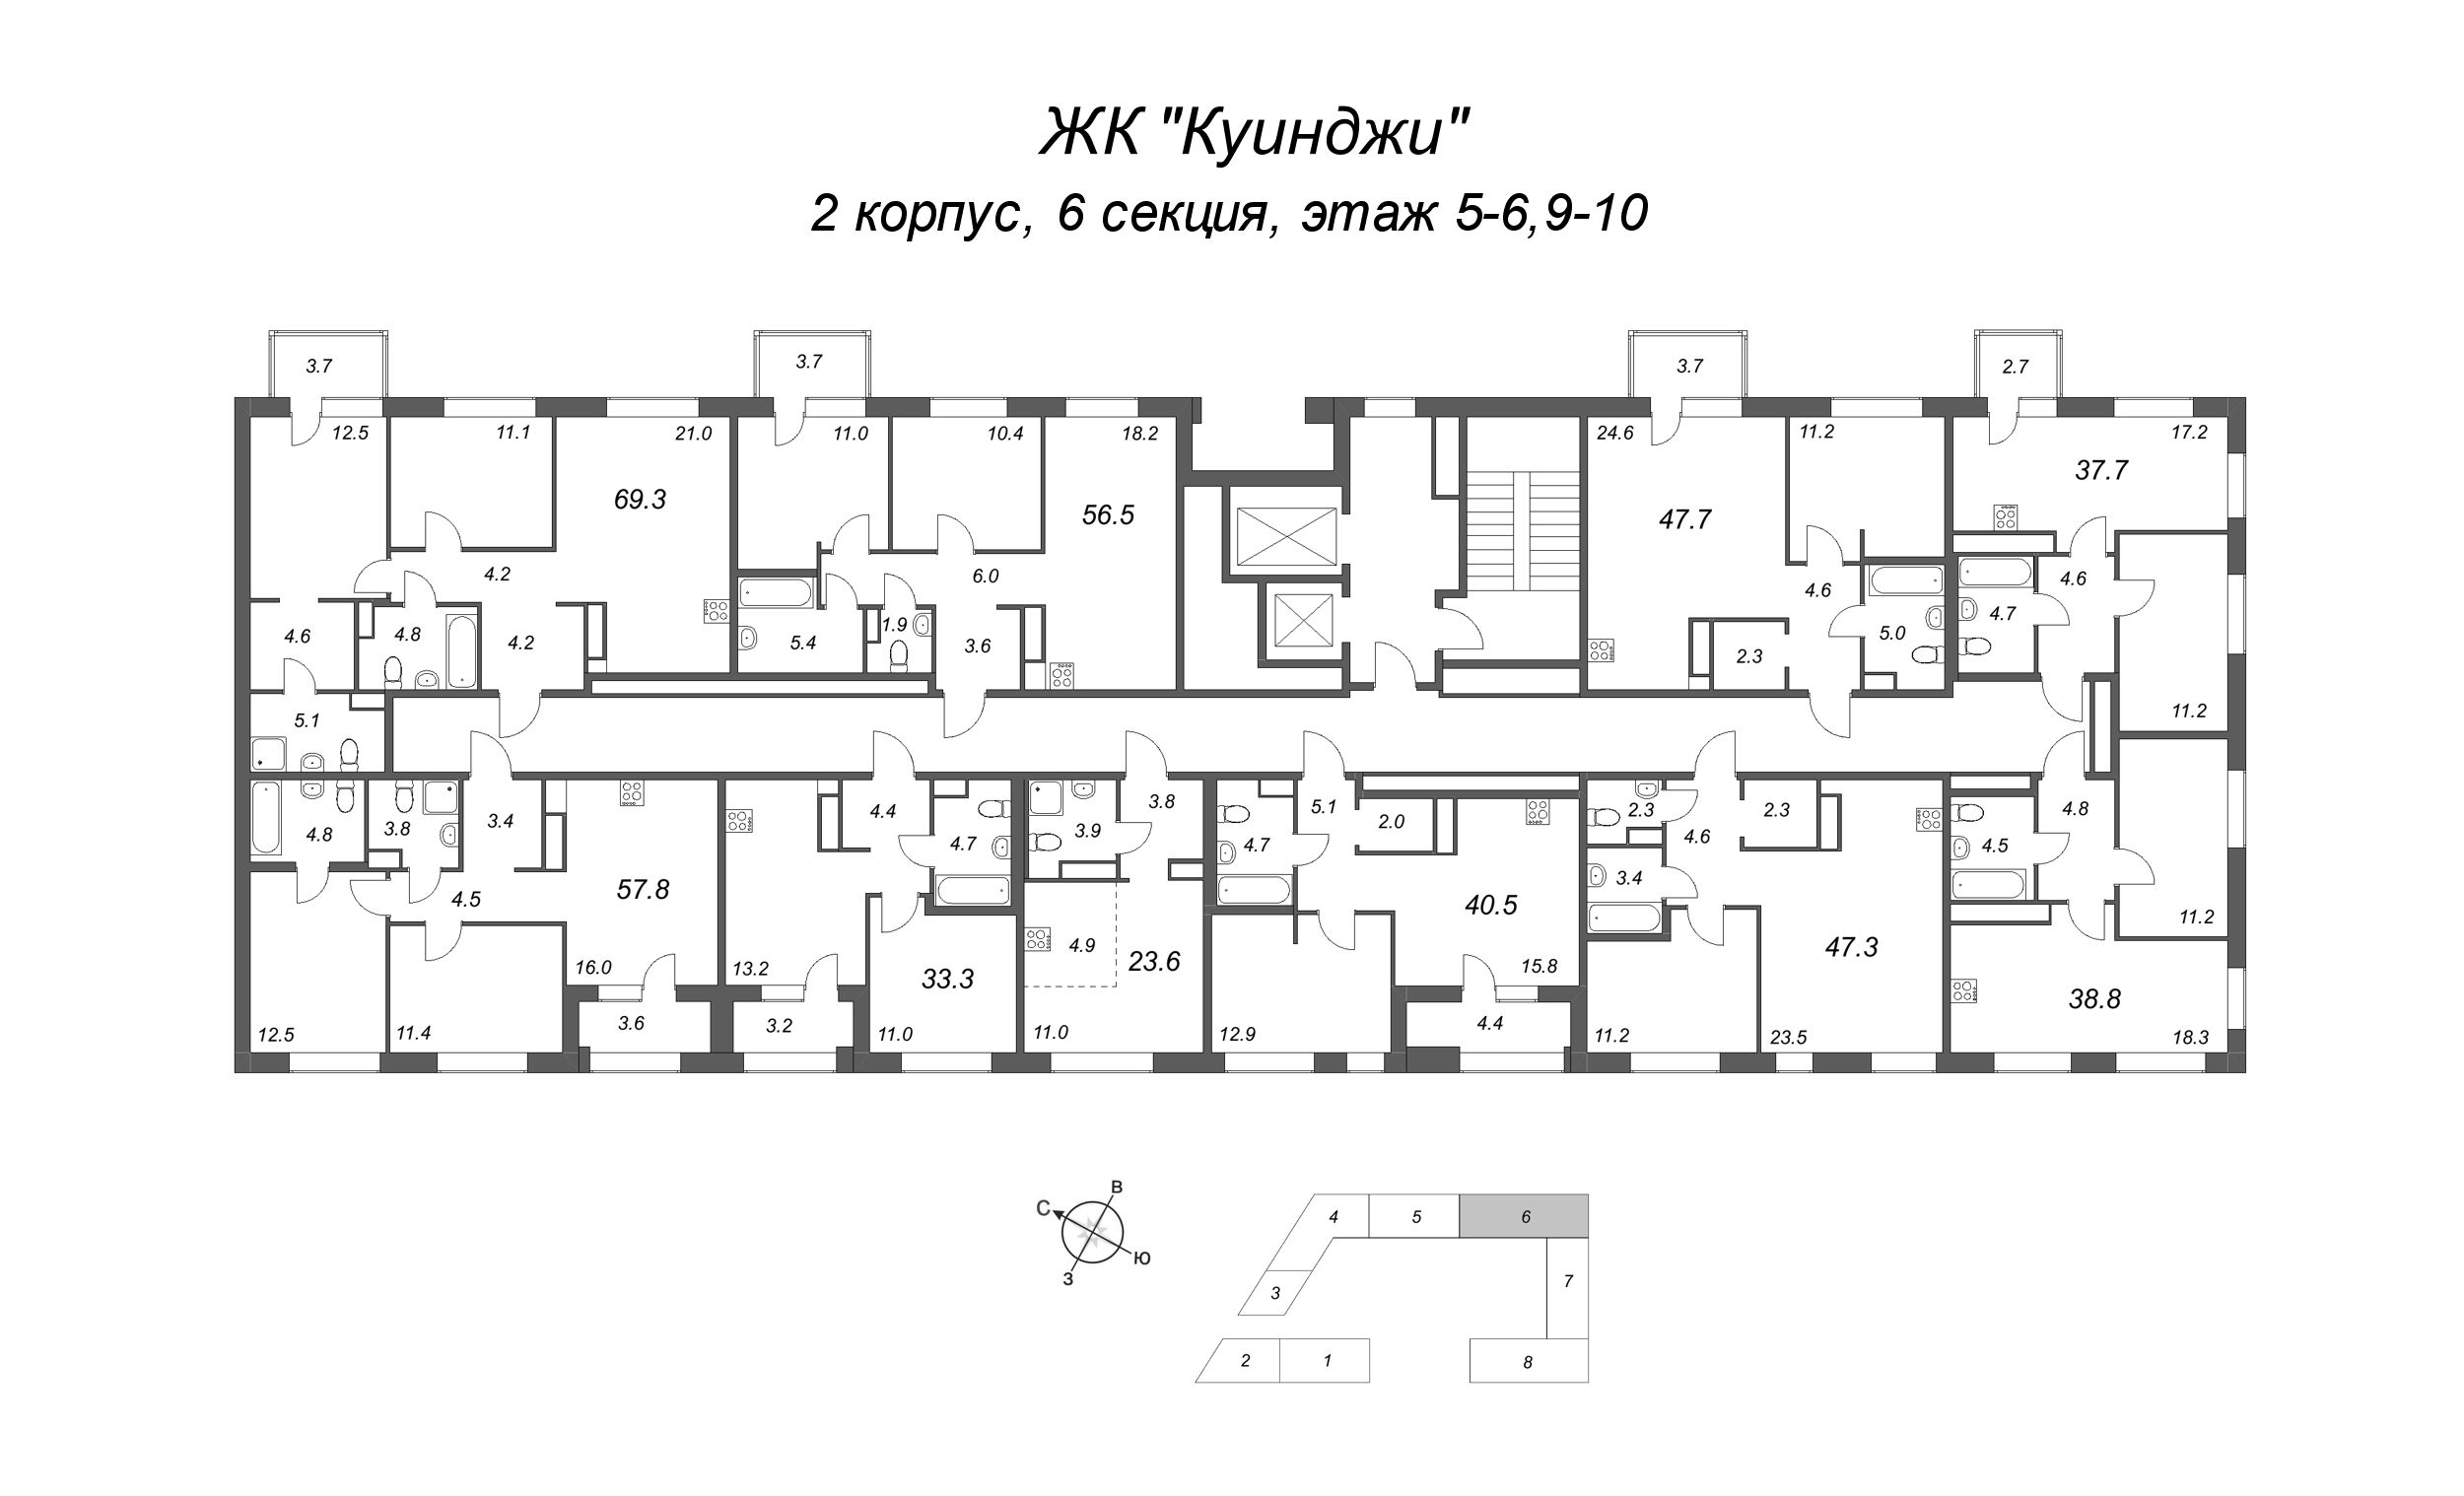 3-комнатная (Евро) квартира, 56.5 м² - планировка этажа